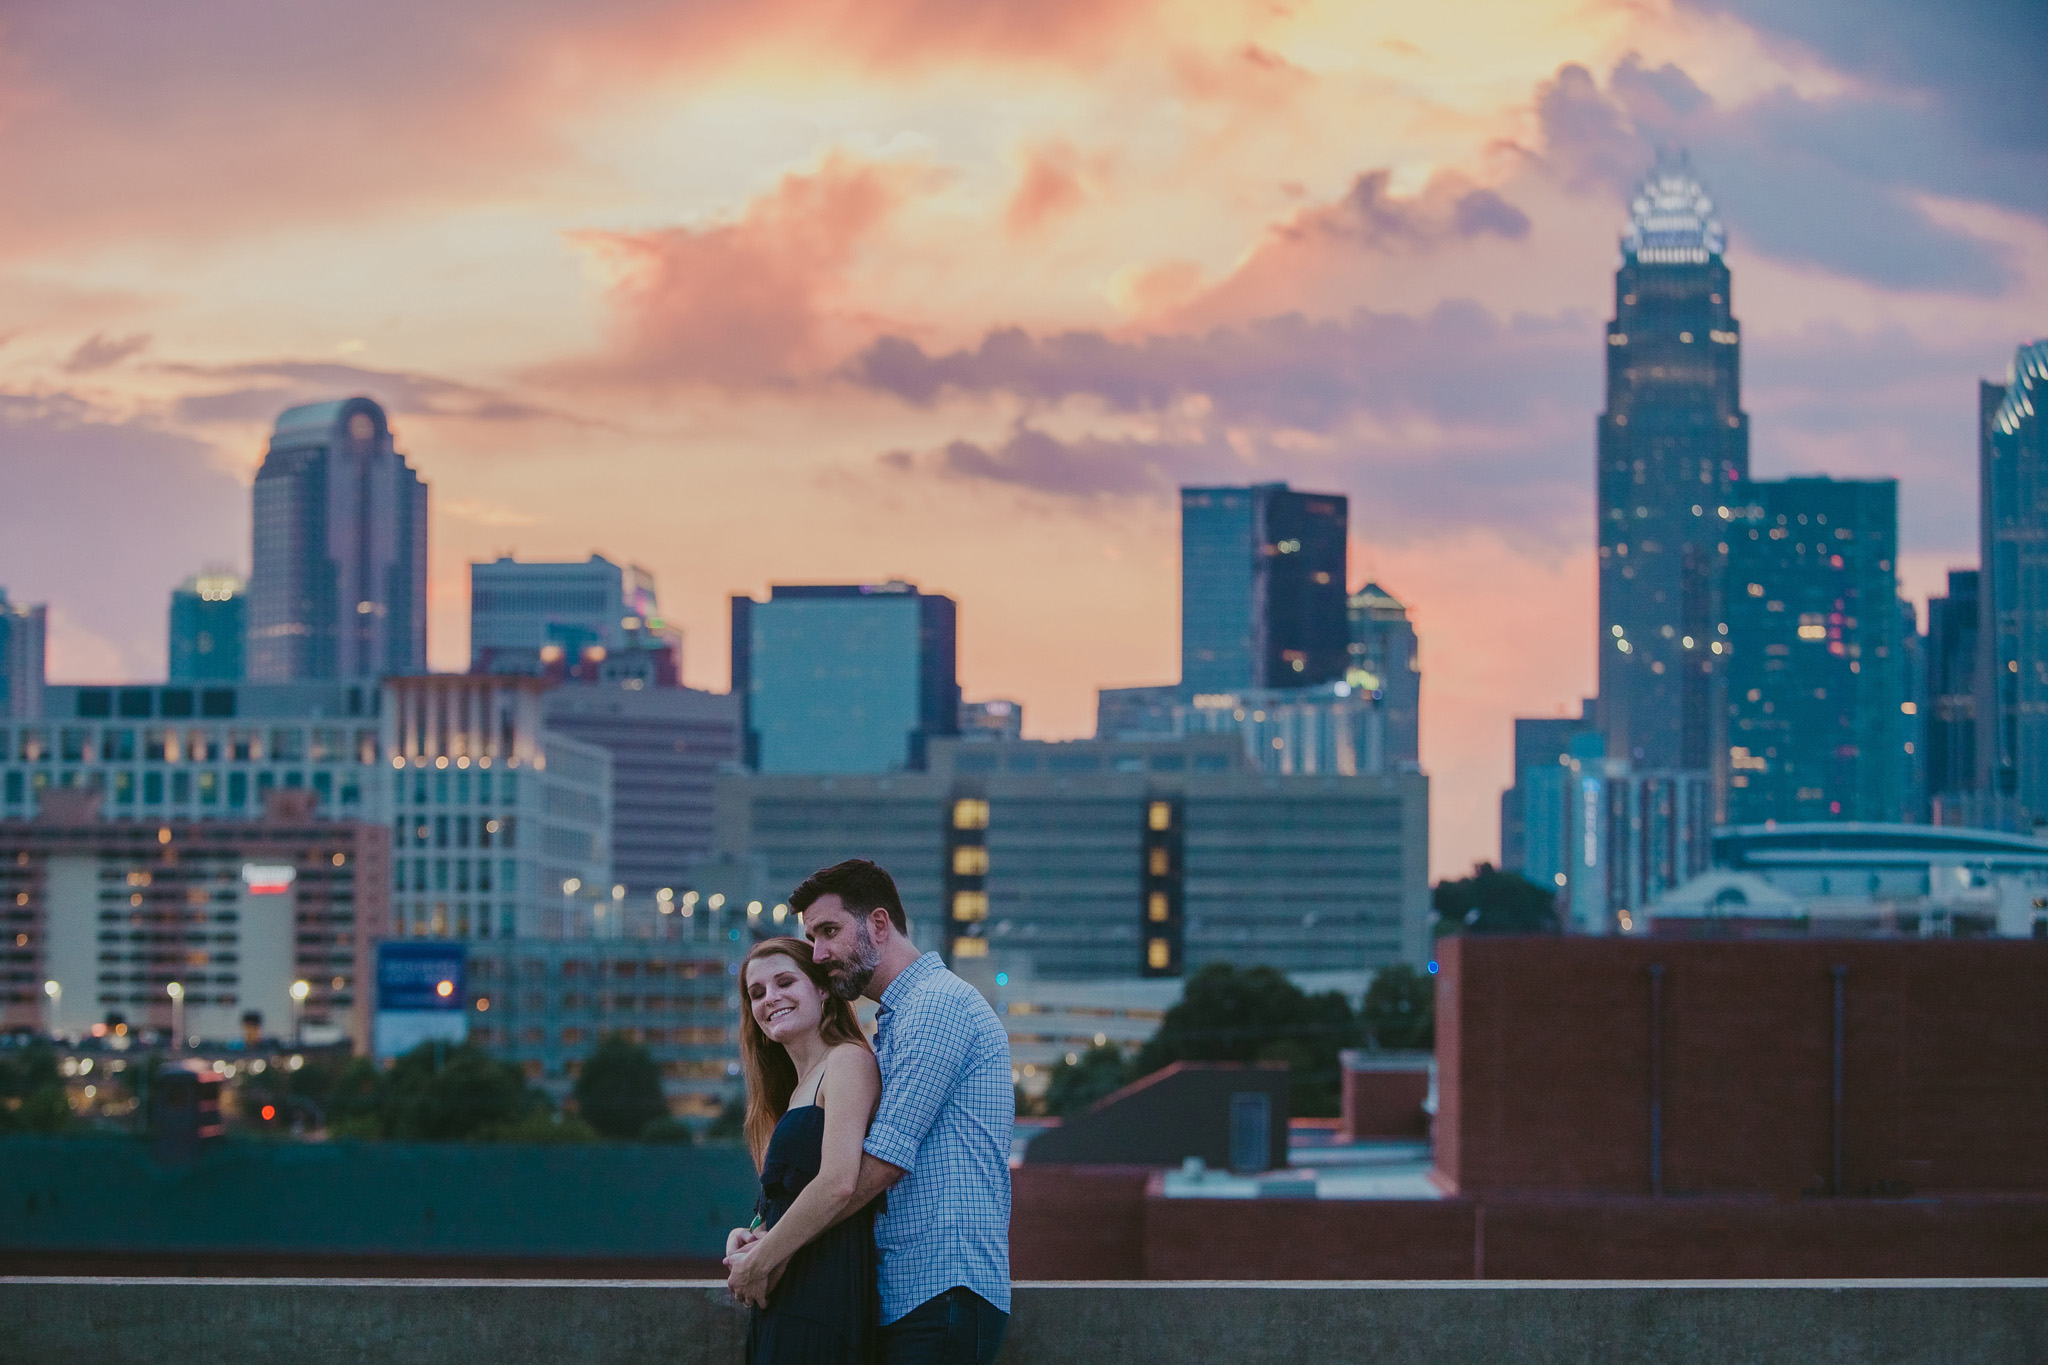 The sun sets behind the Charlotte skyline as Caroline and Stephen hug